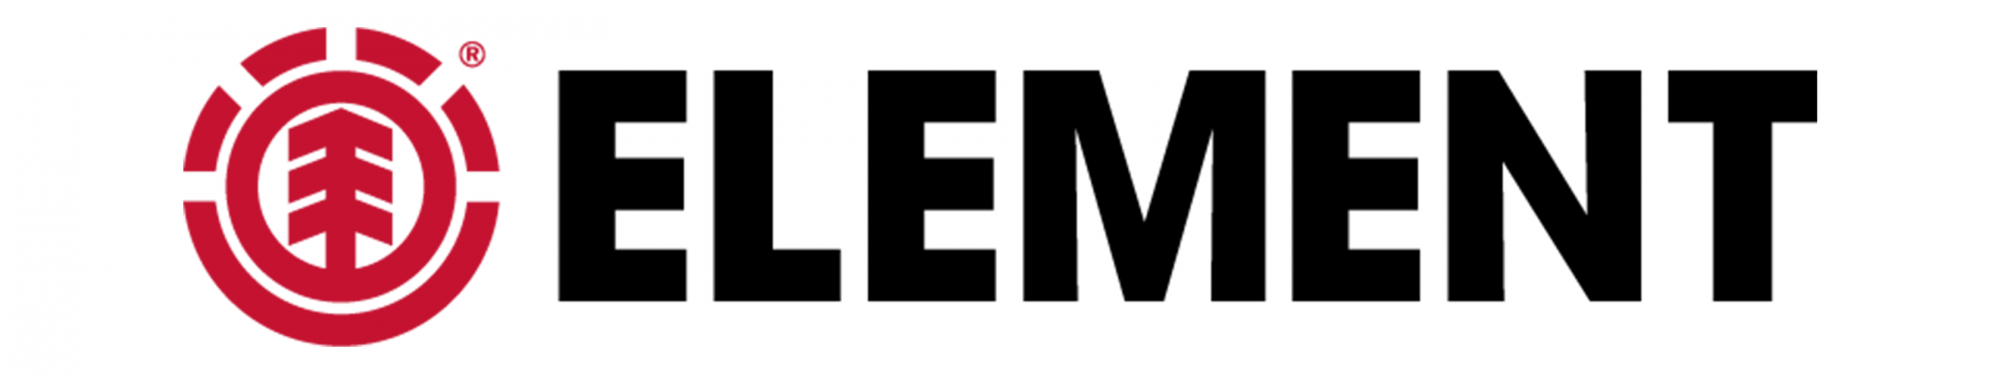 El elements. Element логотип. Element Skateboards logo. Элементы бренда. Exemet логотип.